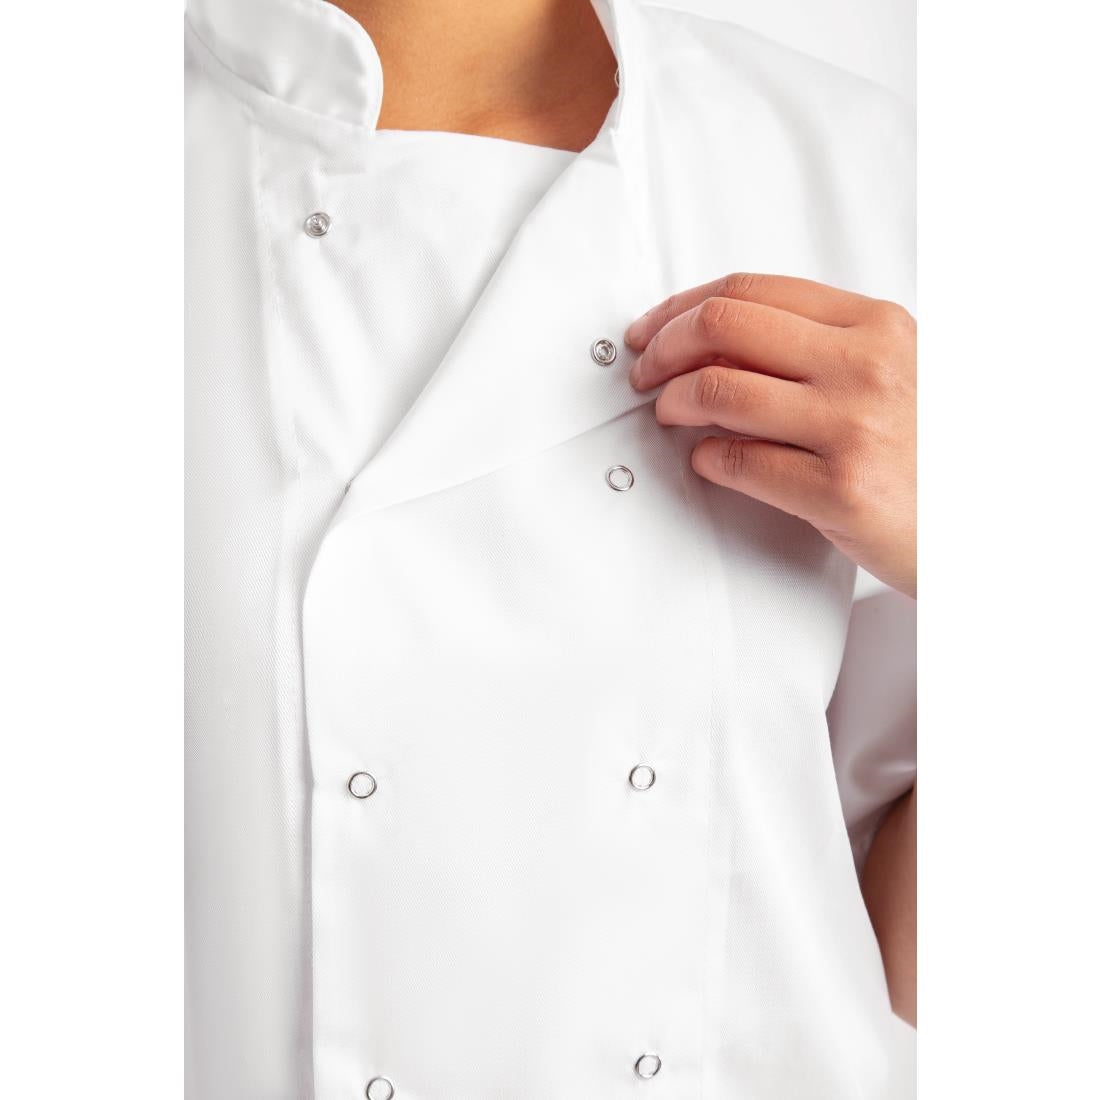 B250-L Whites Boston Unisex Short Sleeve Chefs Jacket White L JD Catering Equipment Solutions Ltd